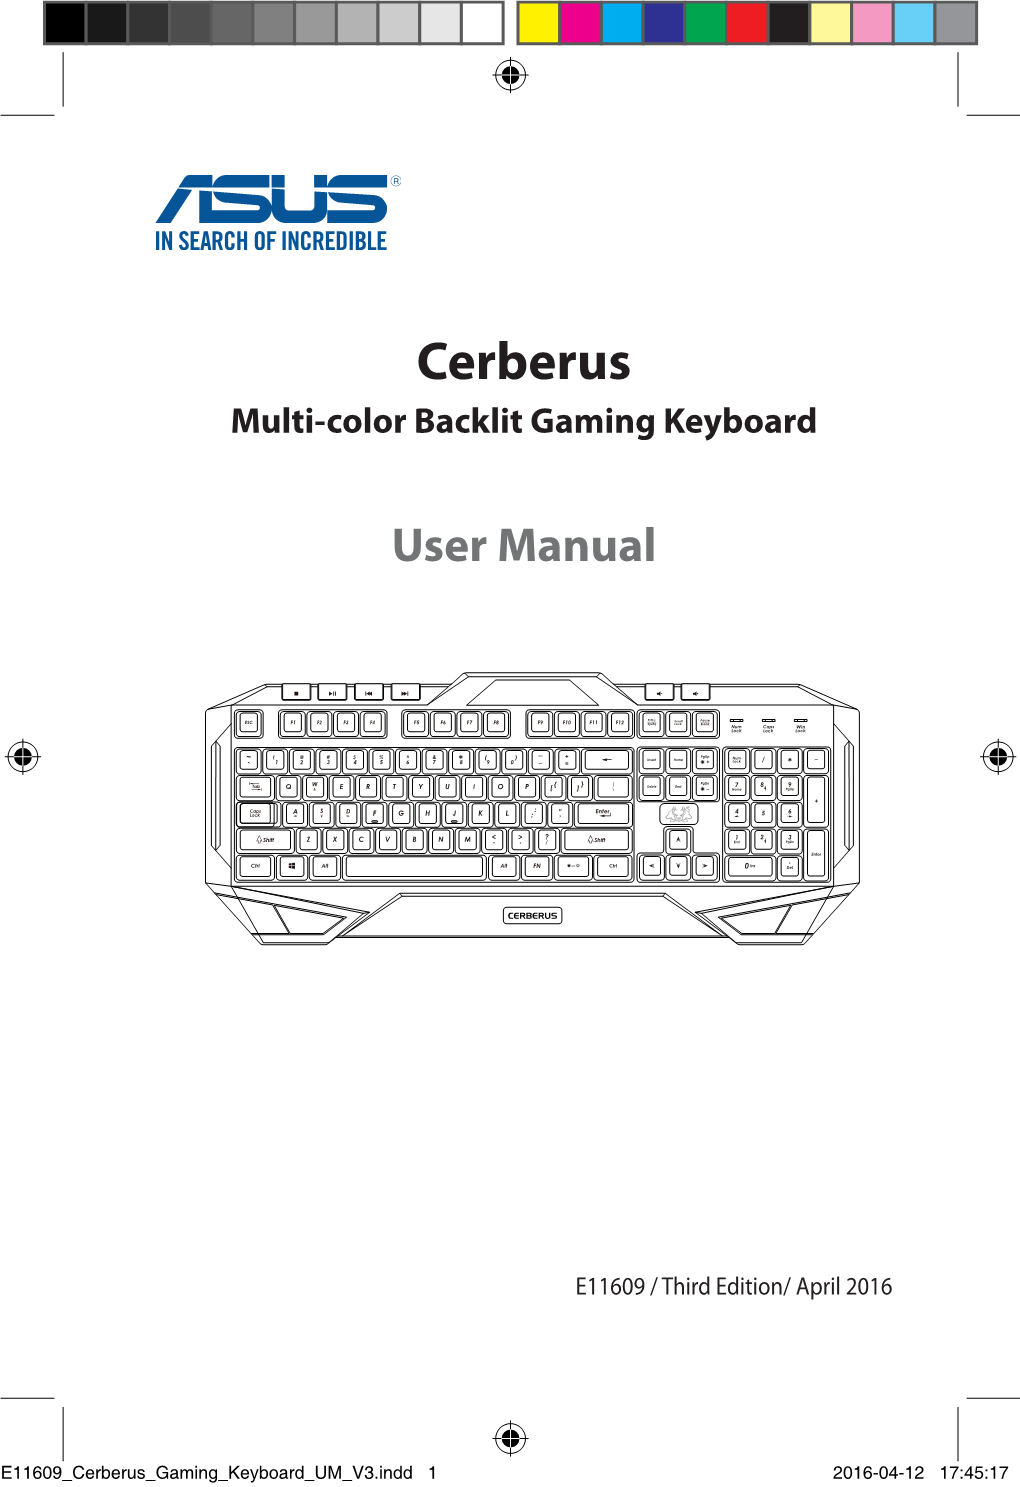 Cerberus Multi-Color Backlit Gaming Keyboard